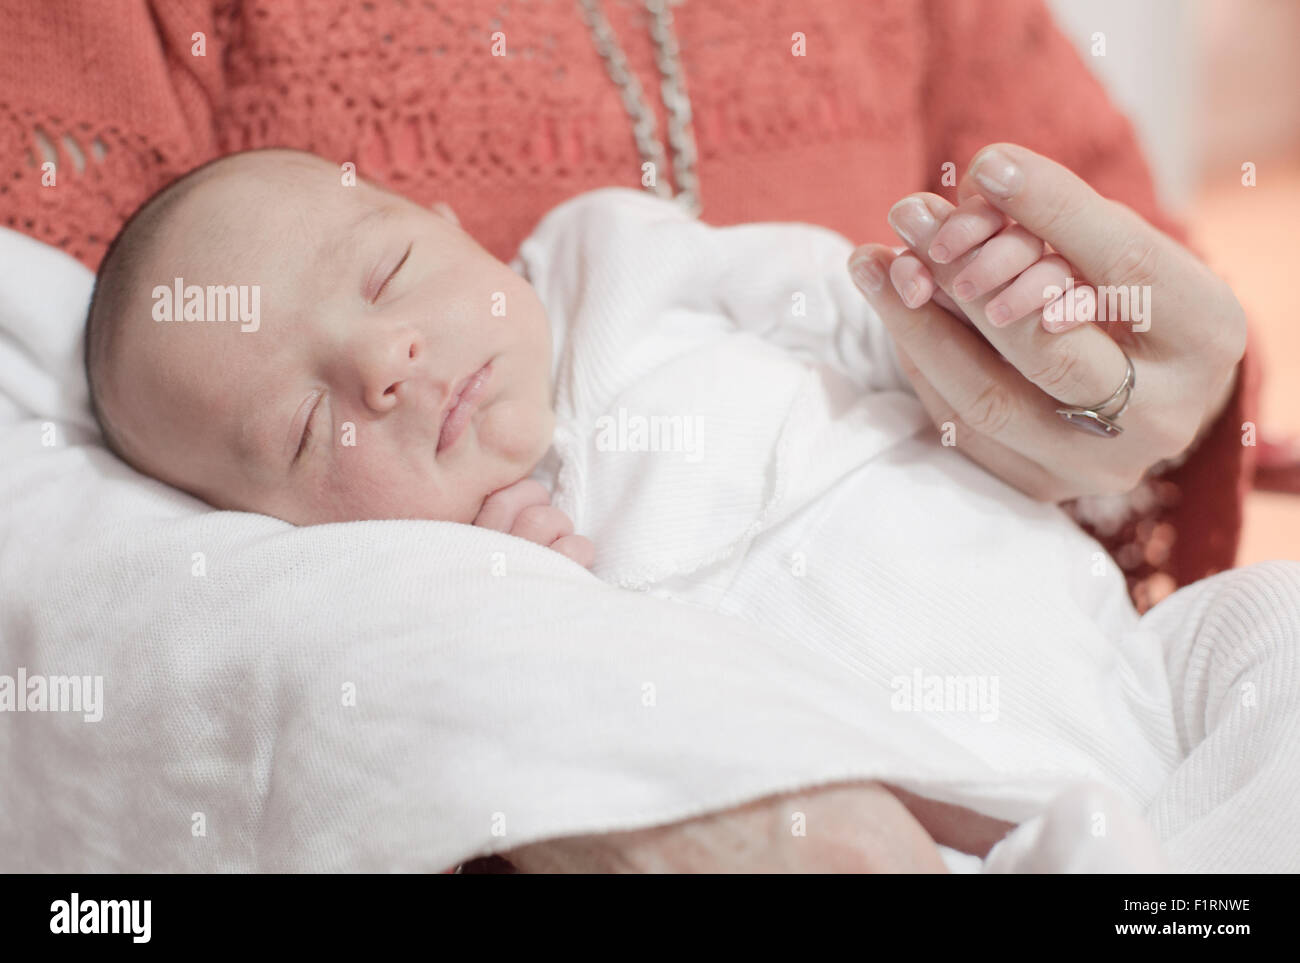 Cute newborn baby girl sleeping and holding grandmother's hand Stock Photo